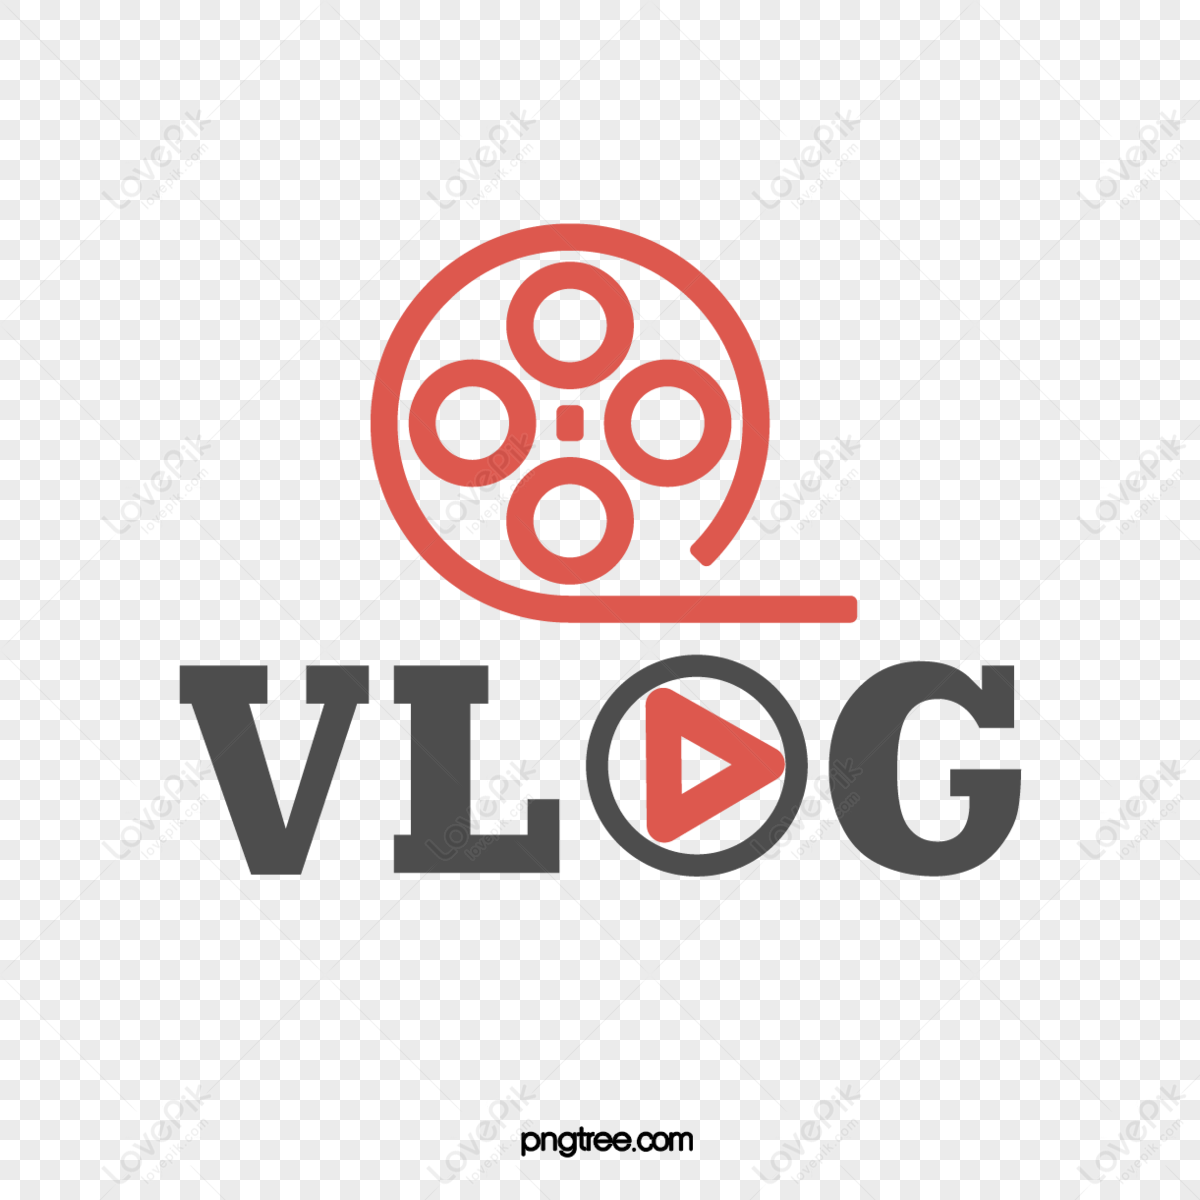 My Original Vlog Logo, Flat Style Royalty Free SVG, Cliparts, Vectors, and  Stock Illustration. Image 119569449.